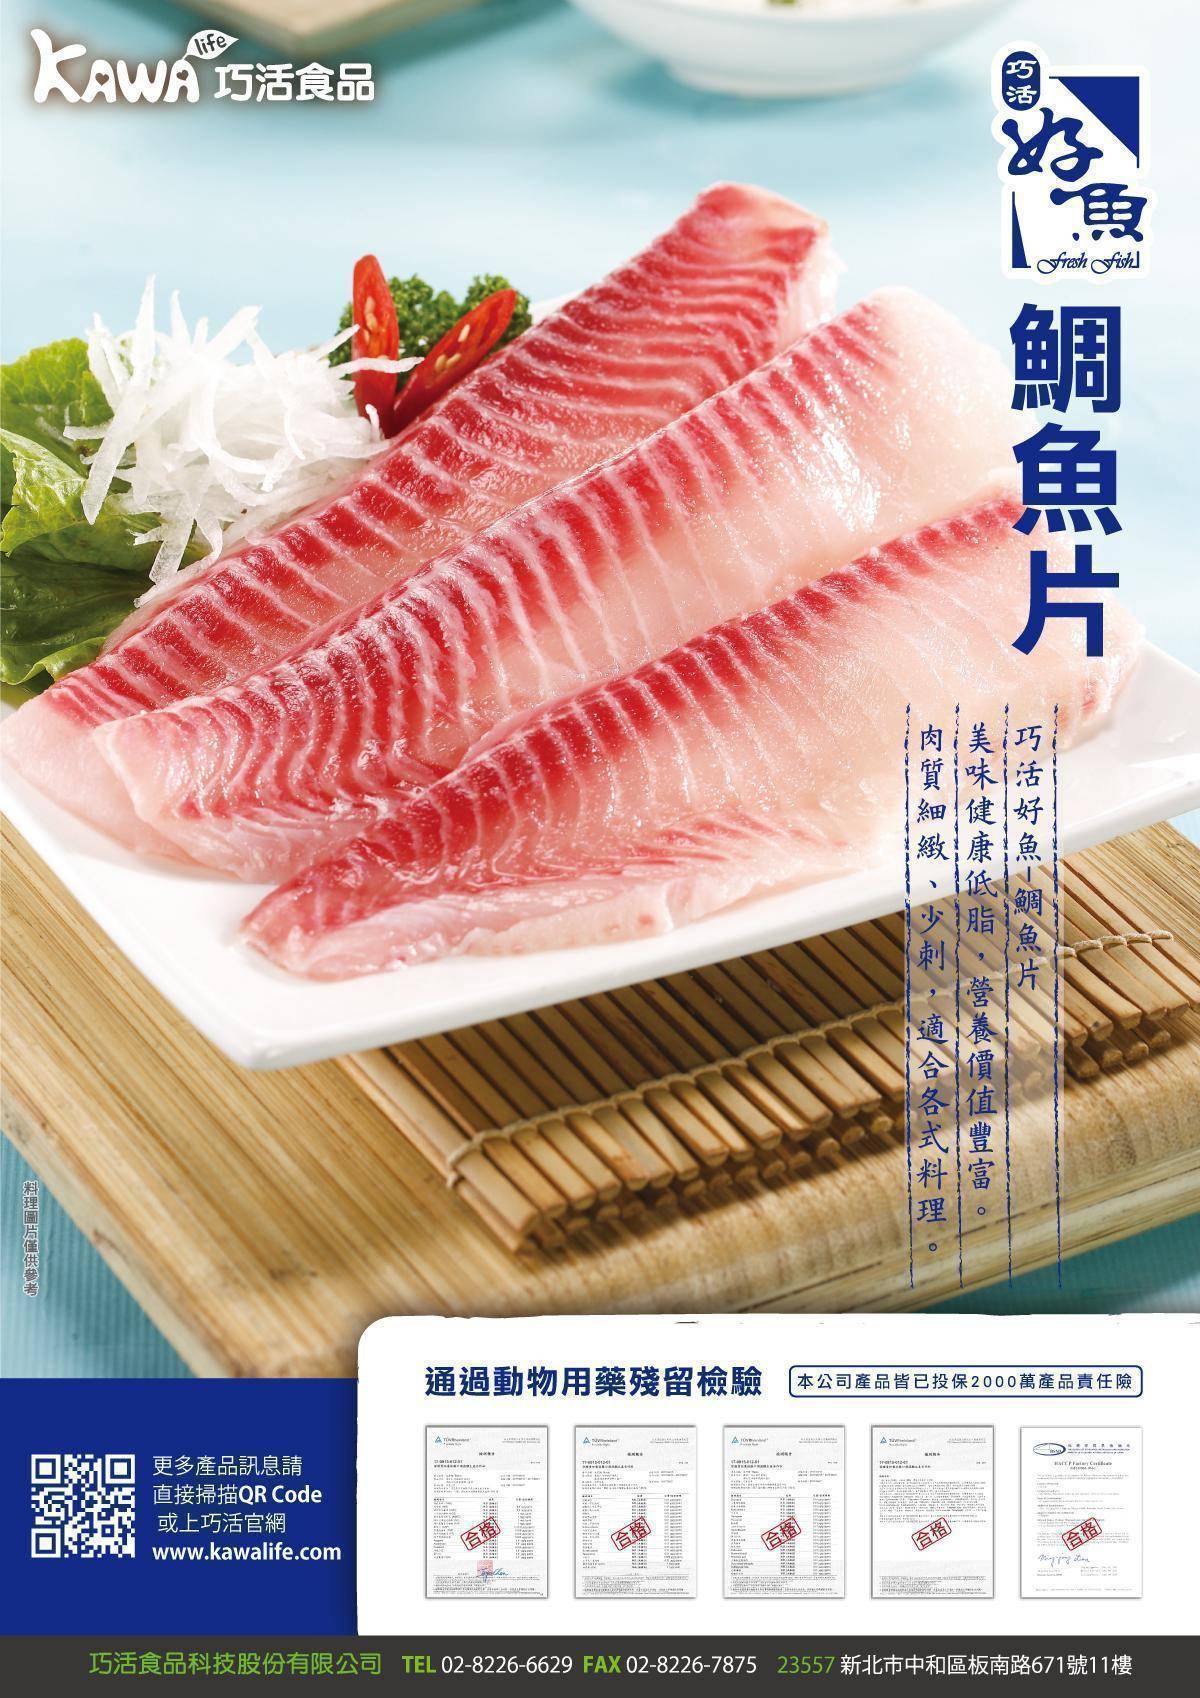 Kawa巧活 台灣鯛魚片 腹部 Kawa 巧活食品 食 在安心選 仿日本飼養方式 生機飲食 自然完熟 無生長激素 賀爾蒙 立即搶購 商品介紹